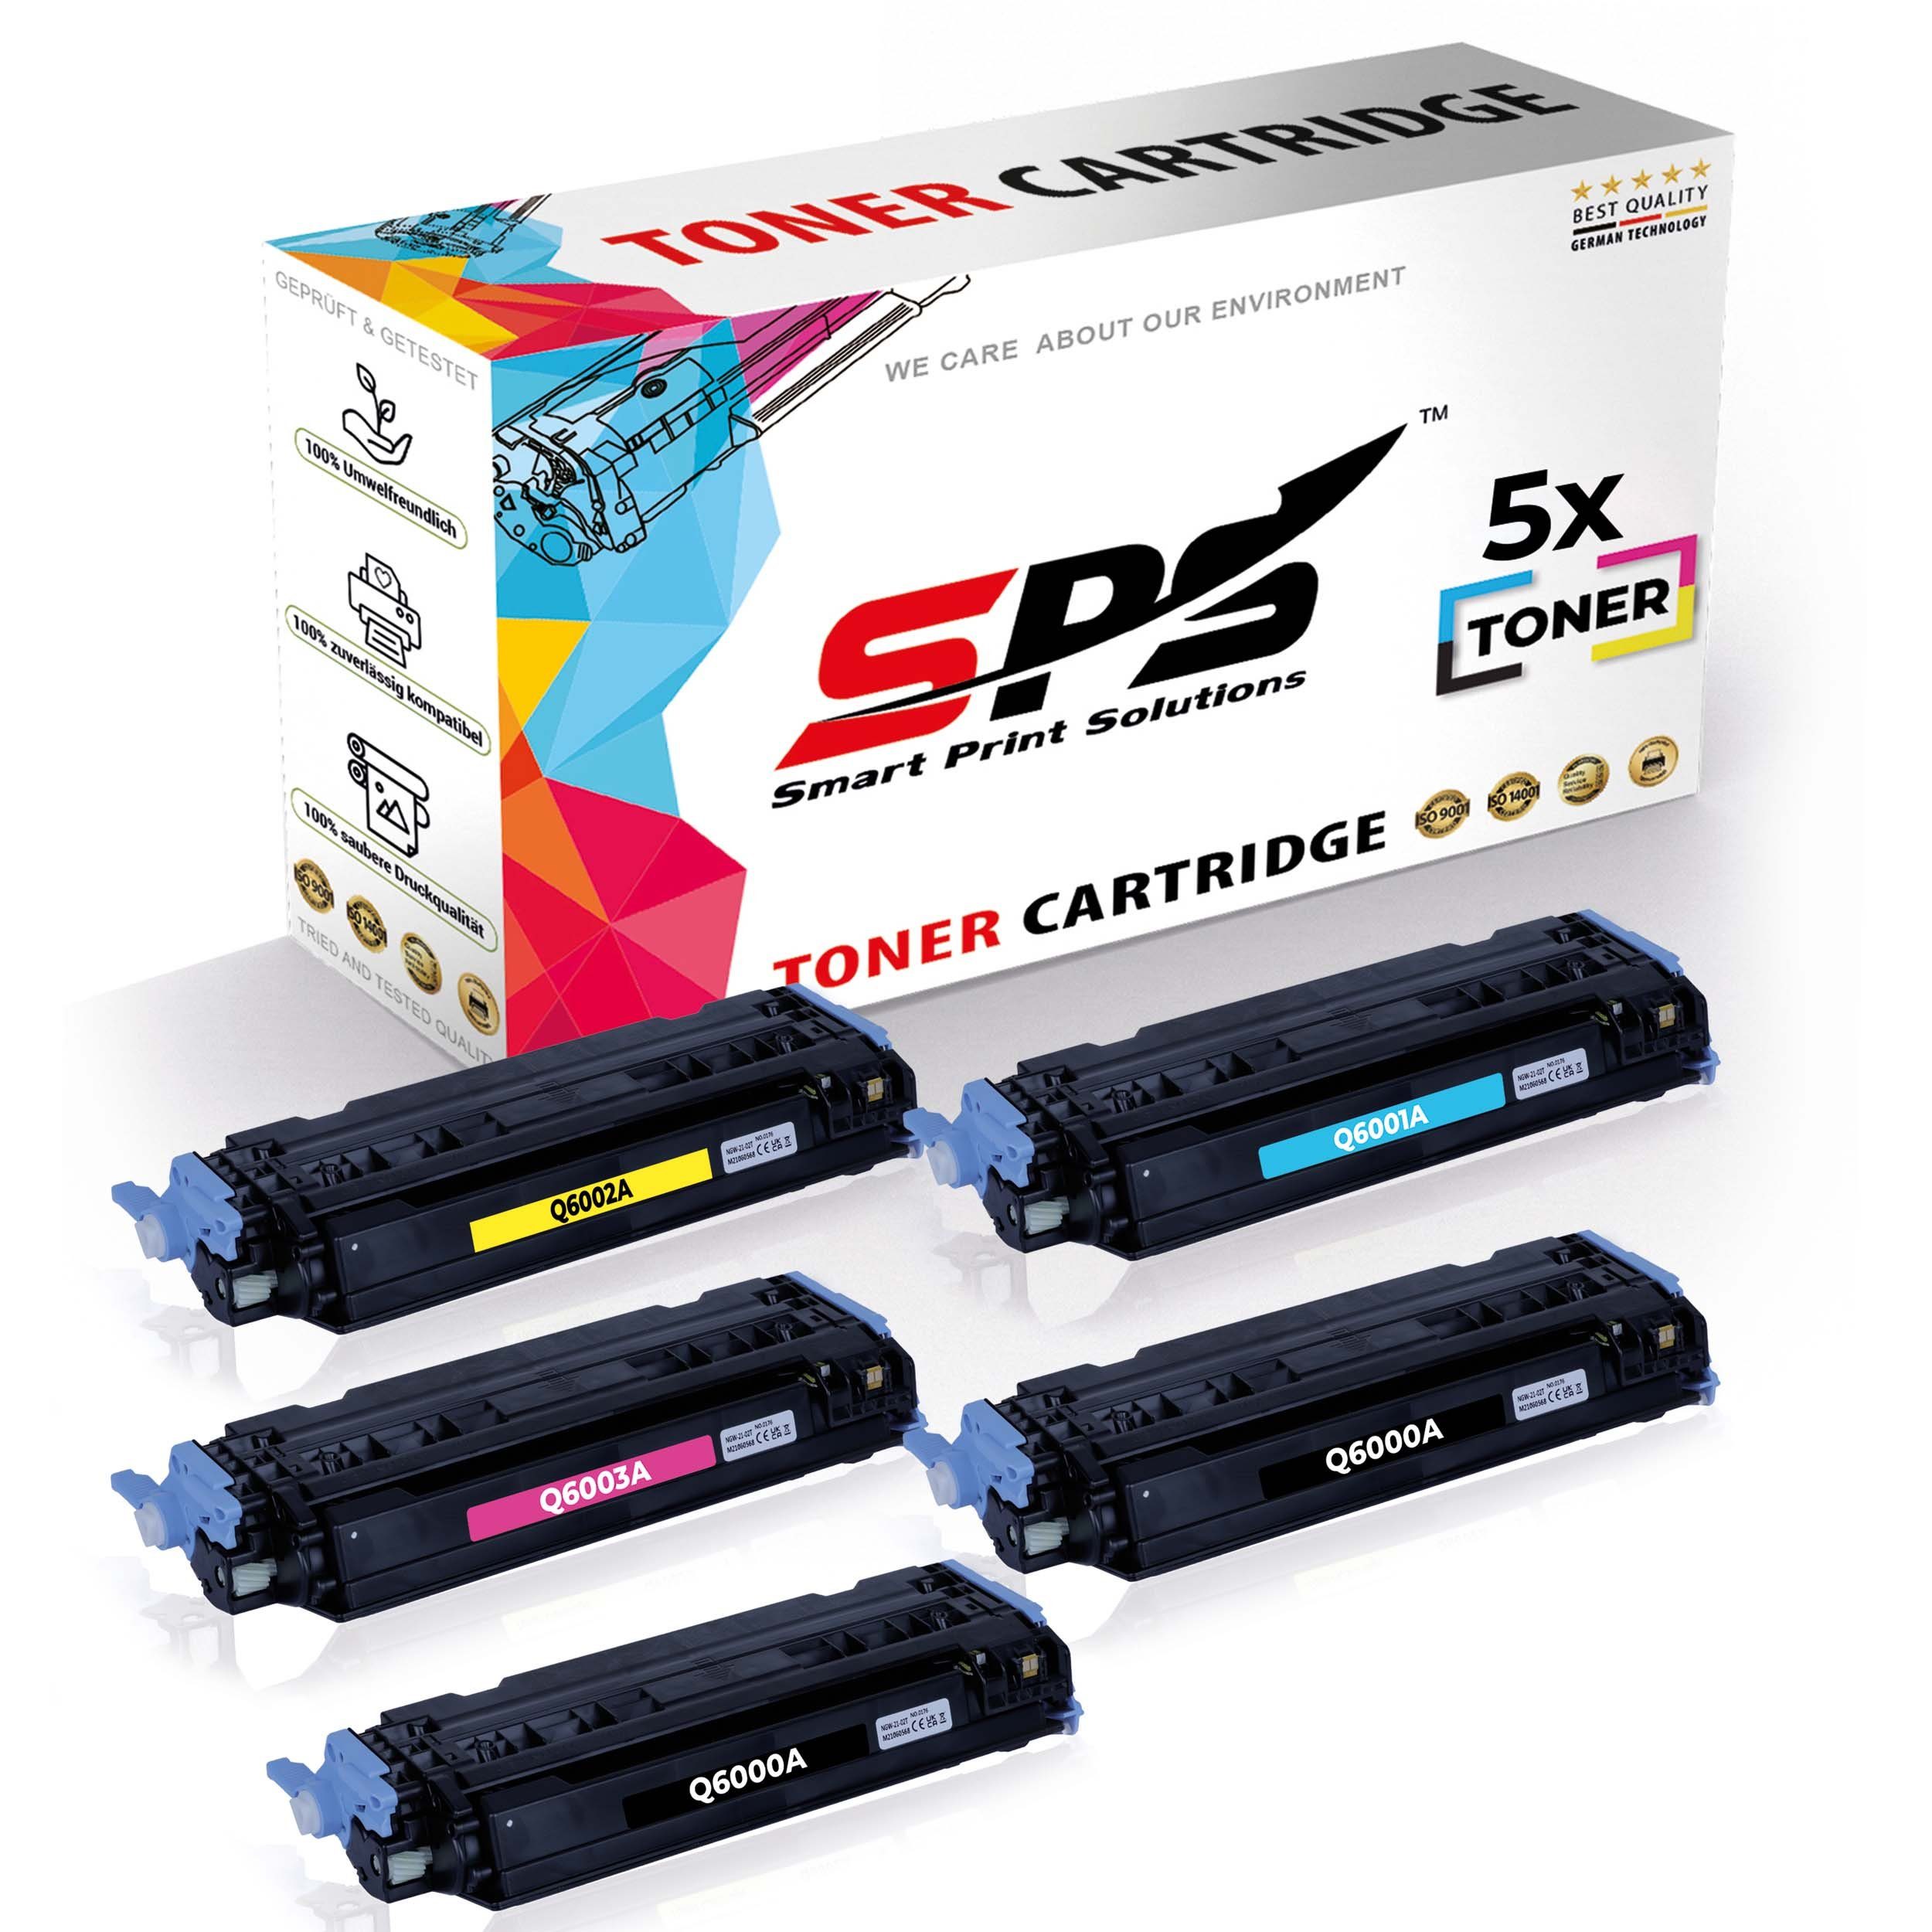 SPS Tonerkartusche 5x Multipack Set Kompatibel für HP Color Laserjet 2600 TN (124A/Q6001A, (5er Pack)